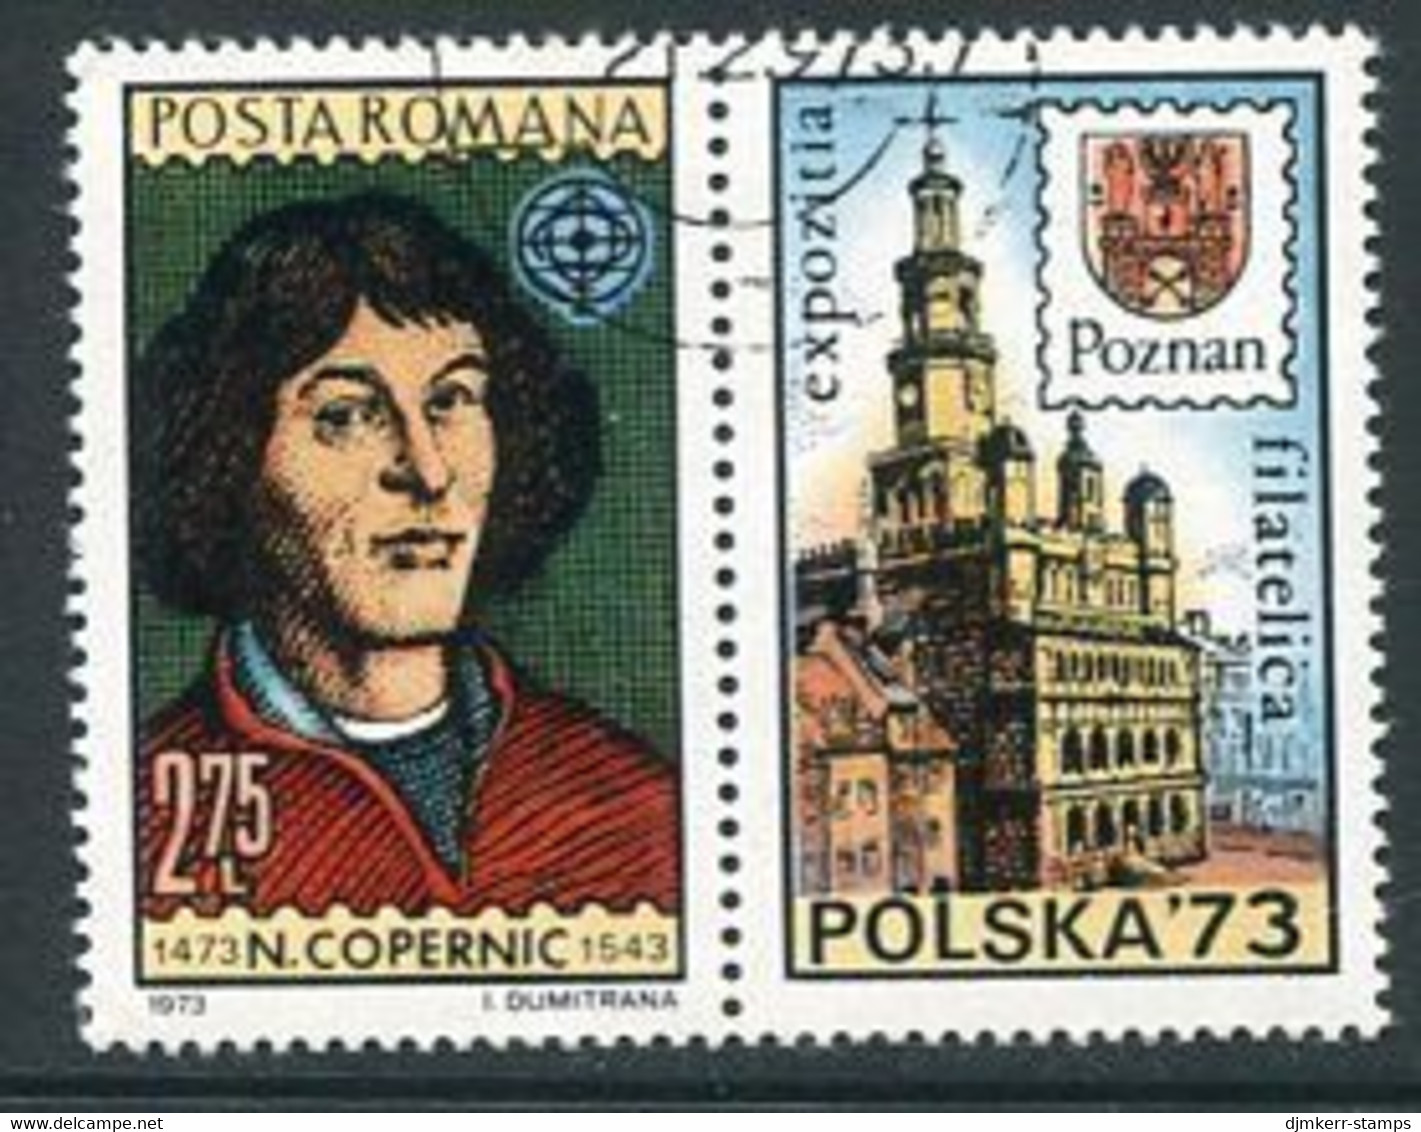 ROMANIA 1973 Copernicus 500th Anniversary Used. .  Michel 3109 - Used Stamps